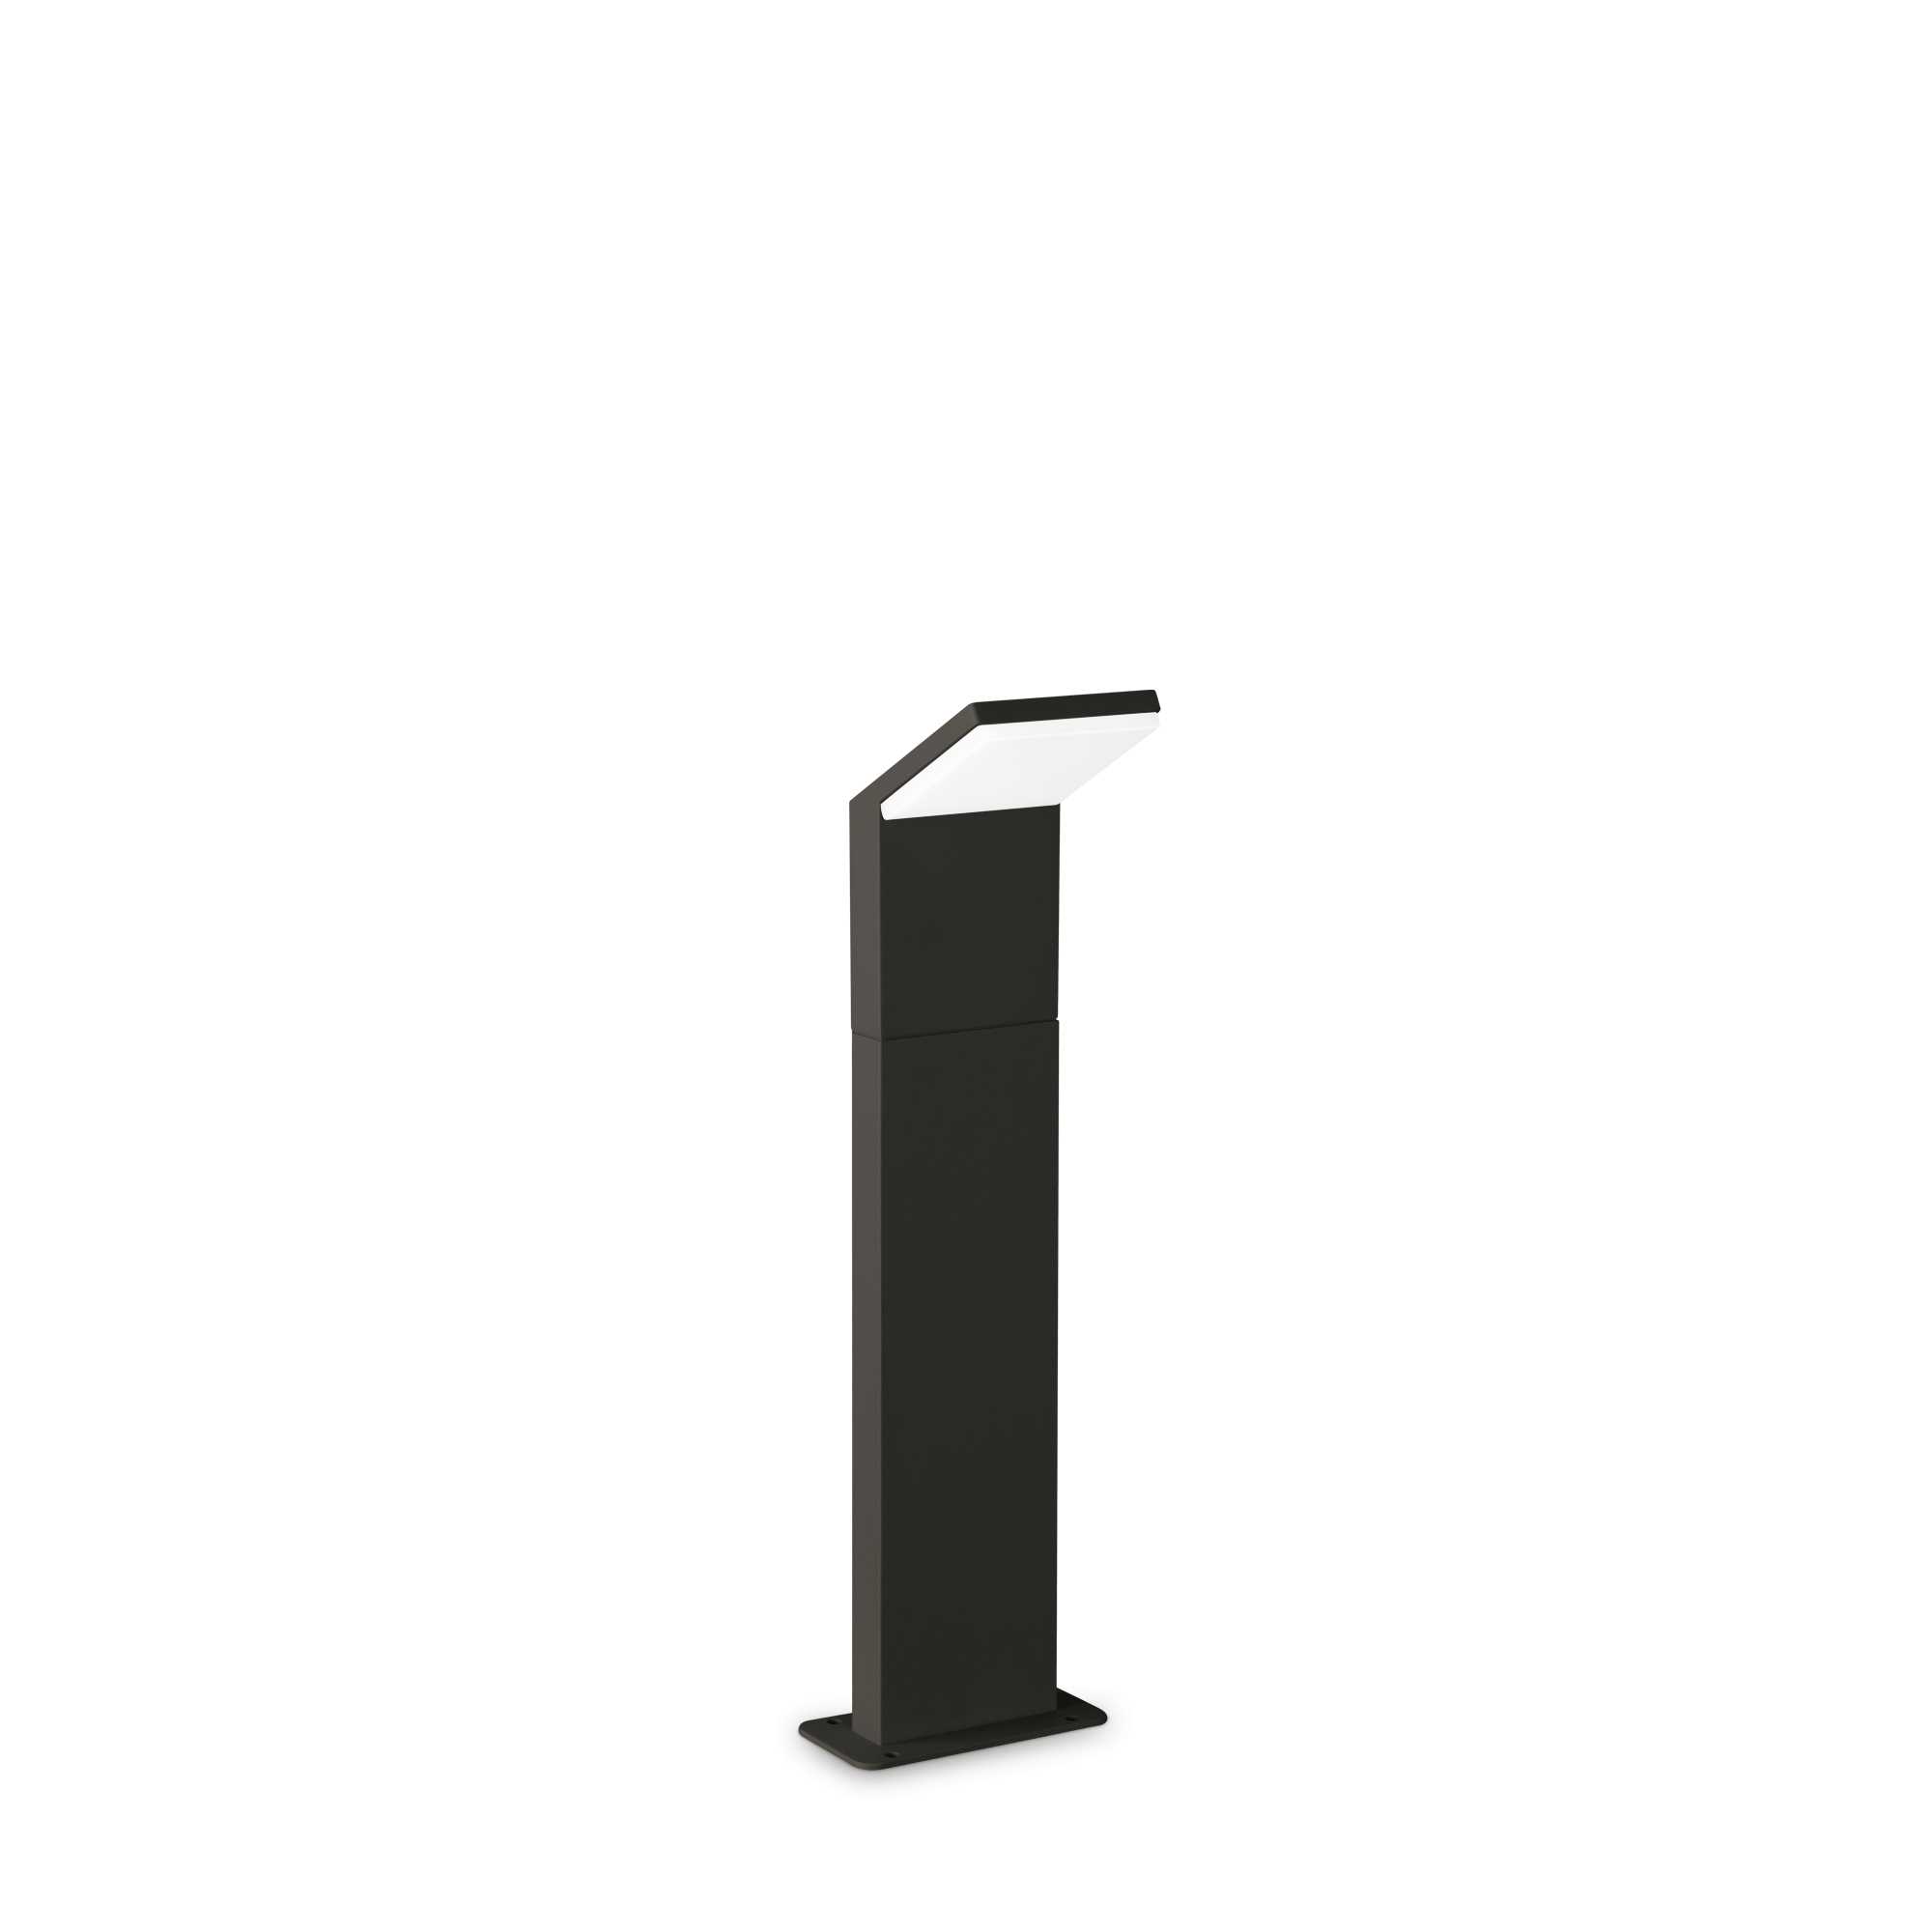 AD hotelska oprema Vanjska podna lampa Style pt h050 (3000k)-Crne boje slika proizvoda